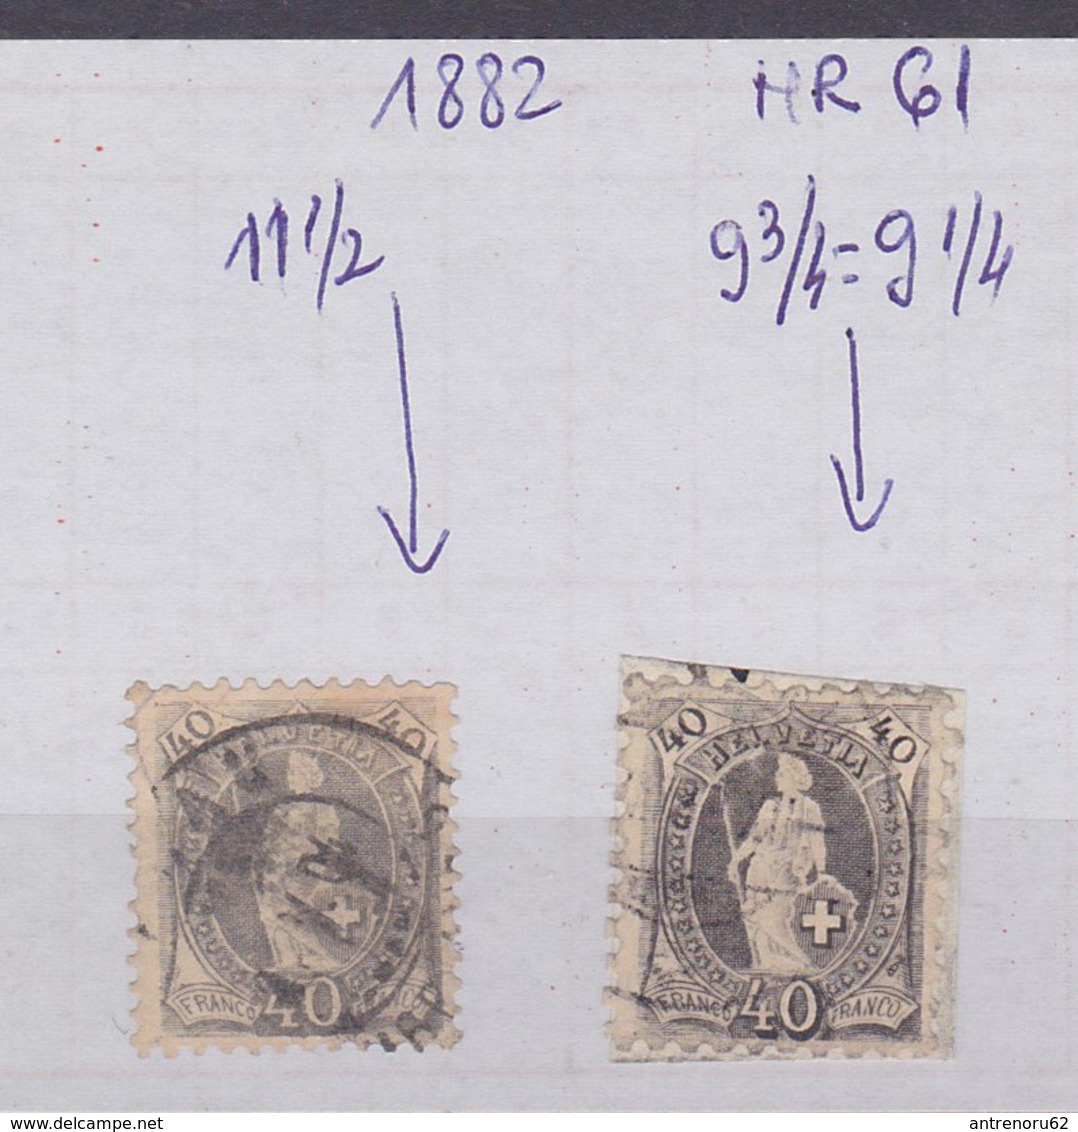 SWITZERLAND-1882-NR-61-GEZ-9.3/4-9.1/6-(COTE-750-EURO)USED-SEE-SCAN - Usados